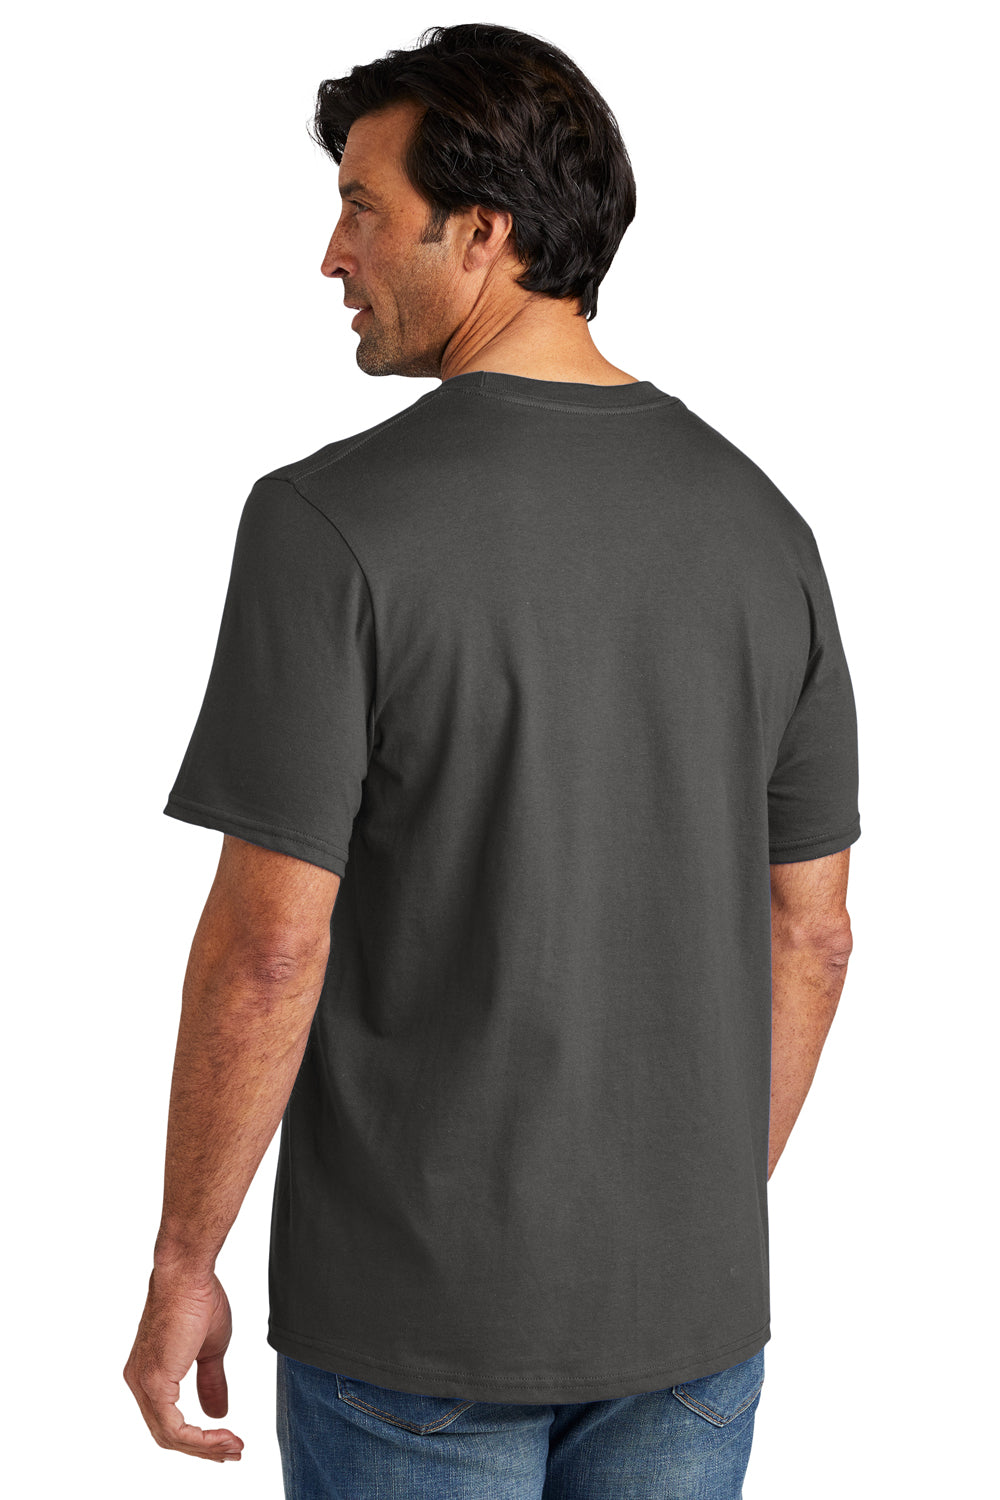 Volunteer Knitwear VL60 Chore Short Sleeve Crewneck T-Shirt Steel Grey Back